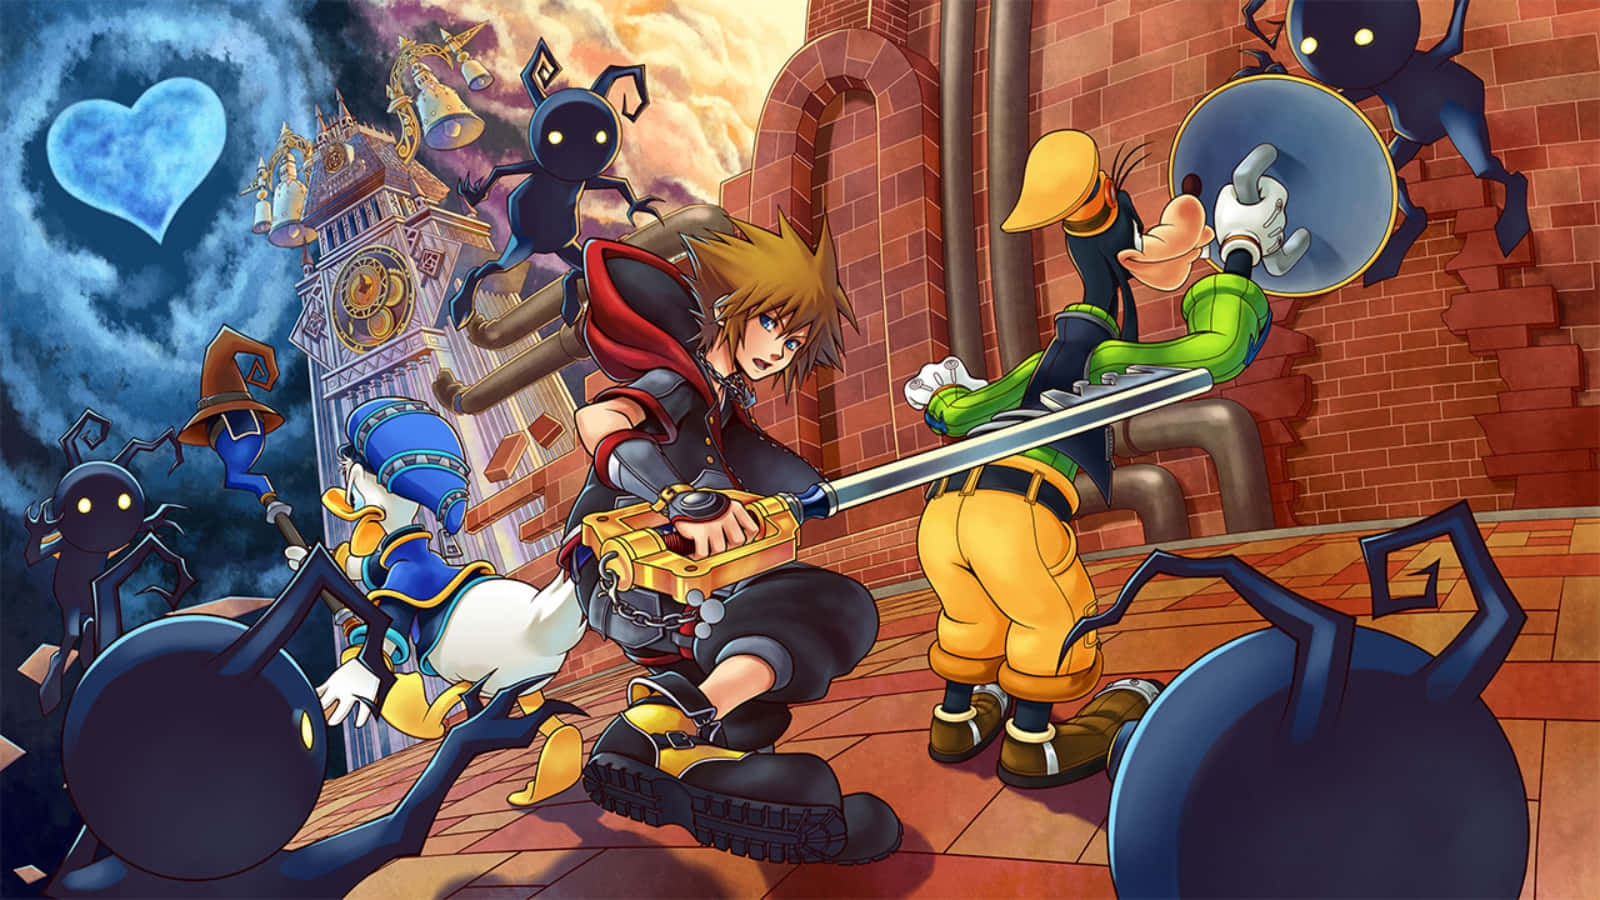 The Adventure of Sora - Kingdom Hearts